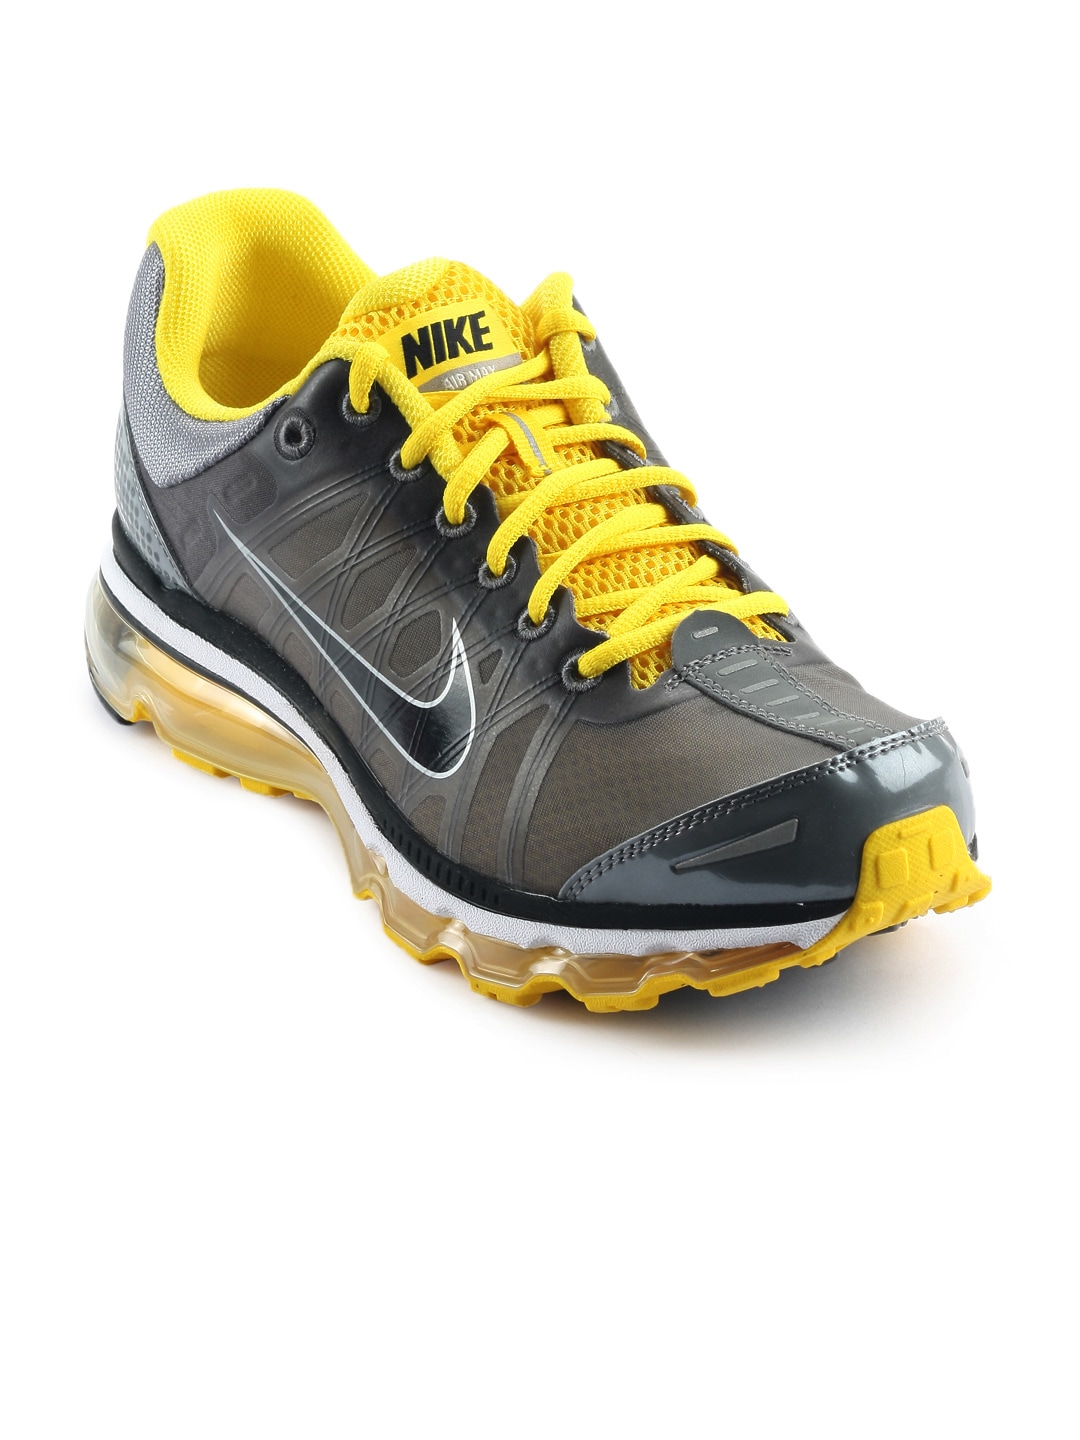 Nike Men Air Max +2009 Grey Sports Shoes